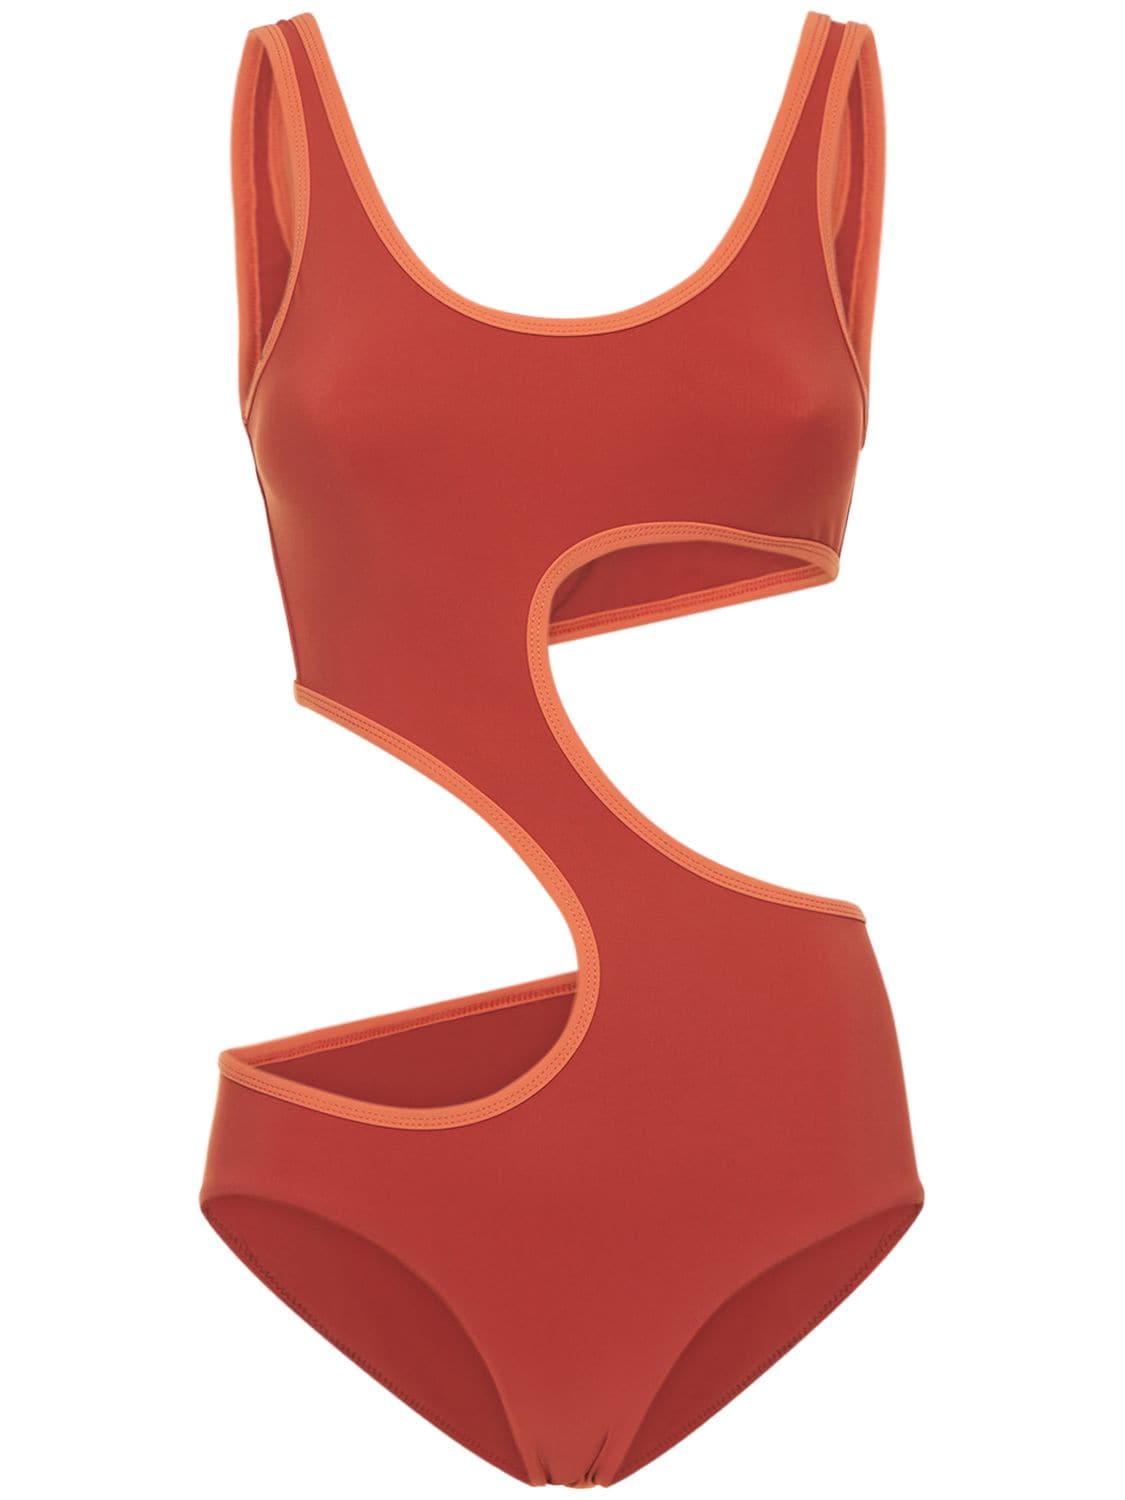 Cutout Stretch Tech One Piece Swimsuit